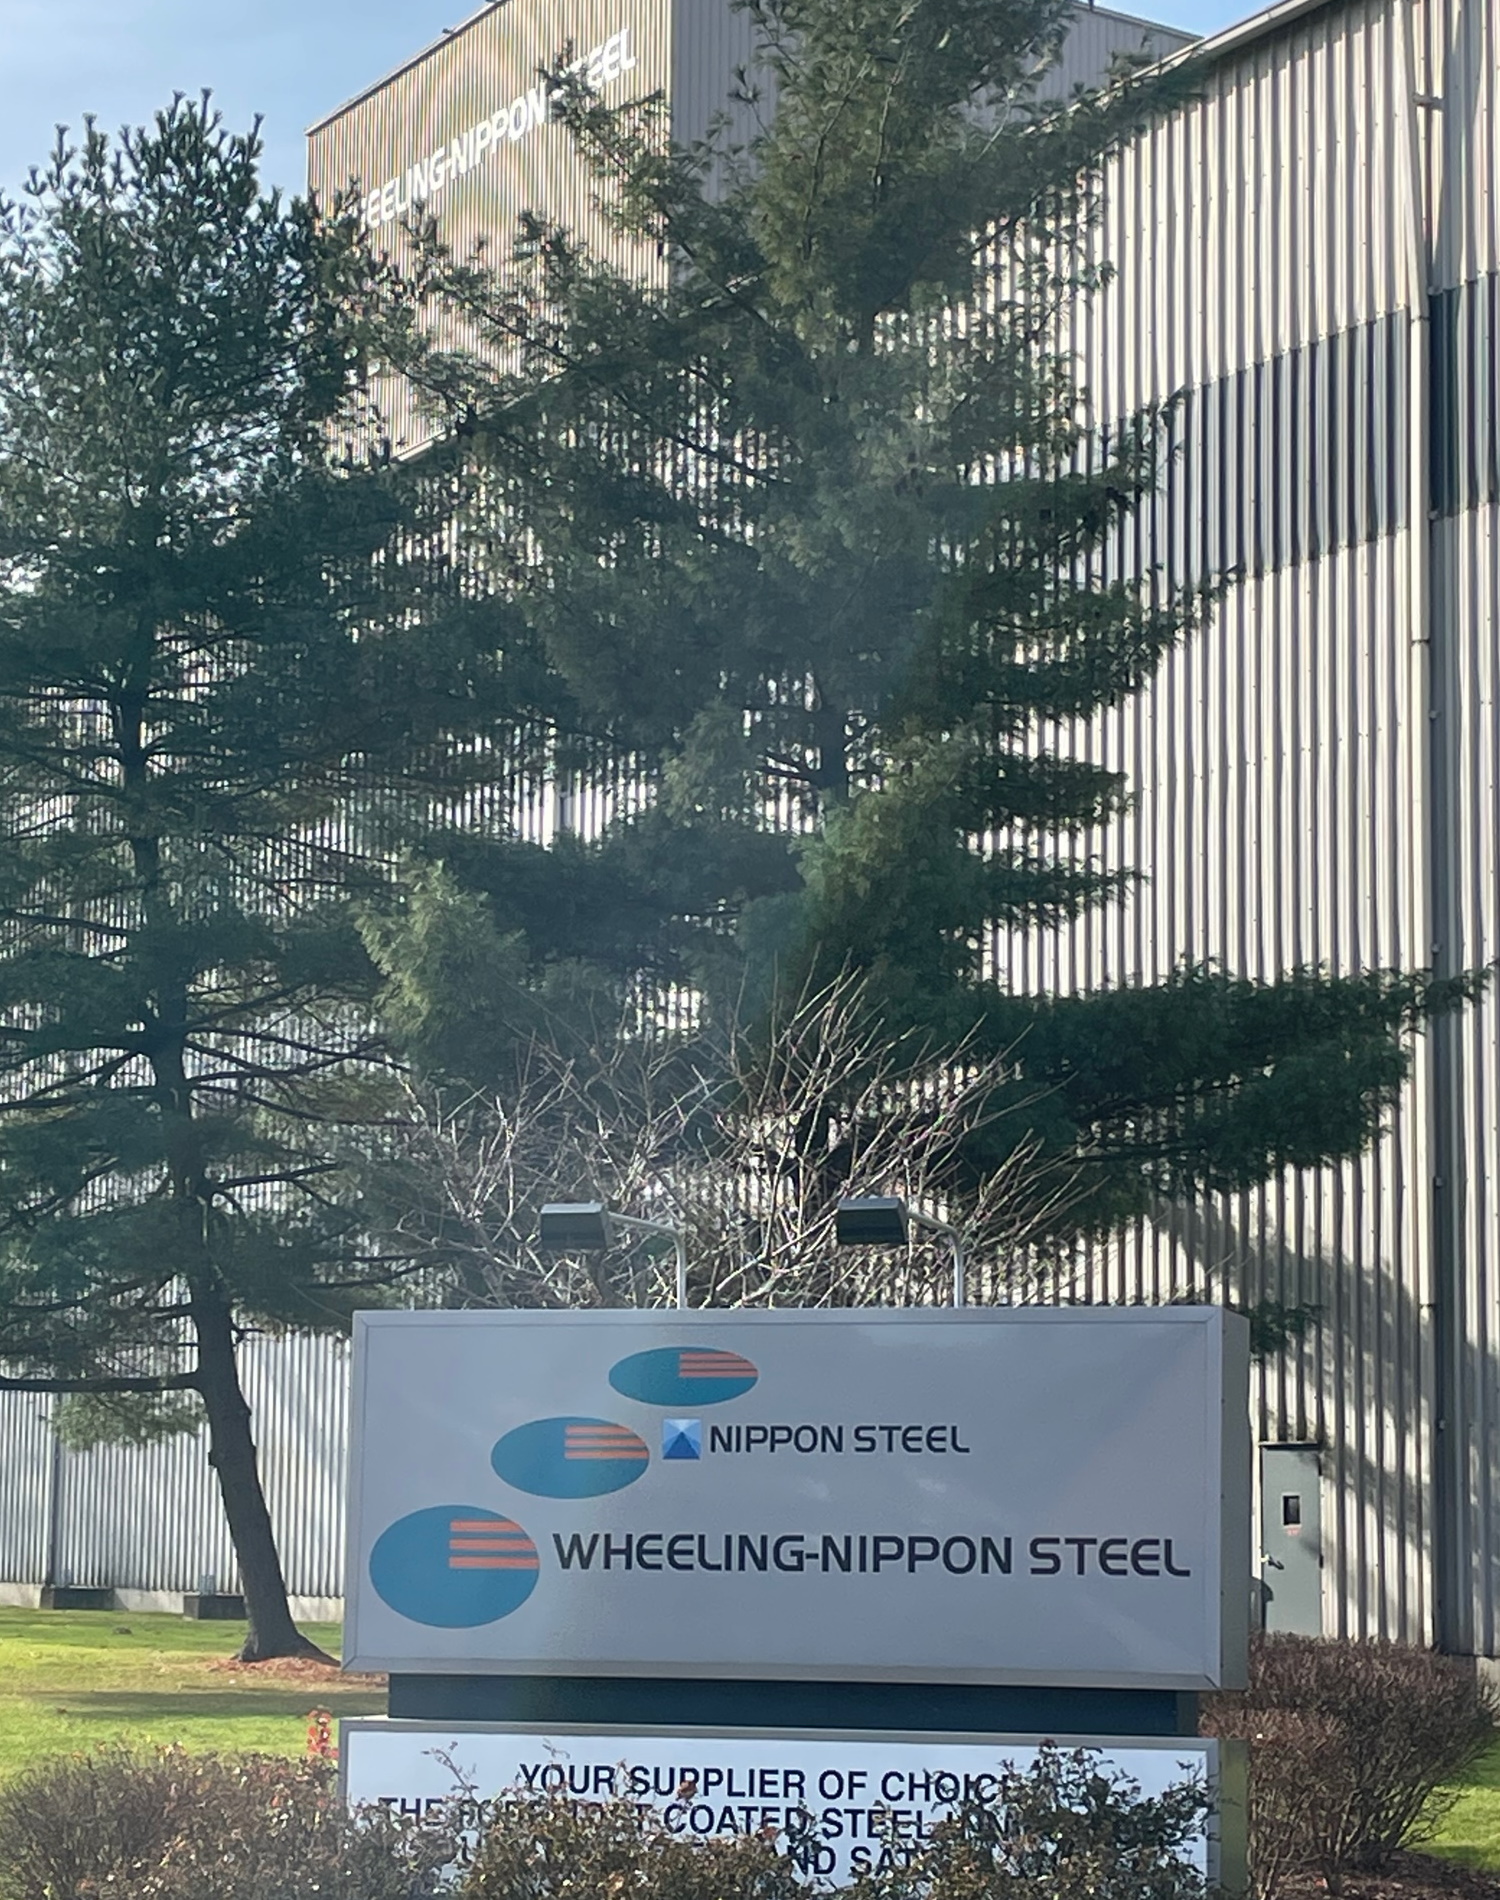 Outside view of WHEELING-NIPPON STEEL steel coating plant